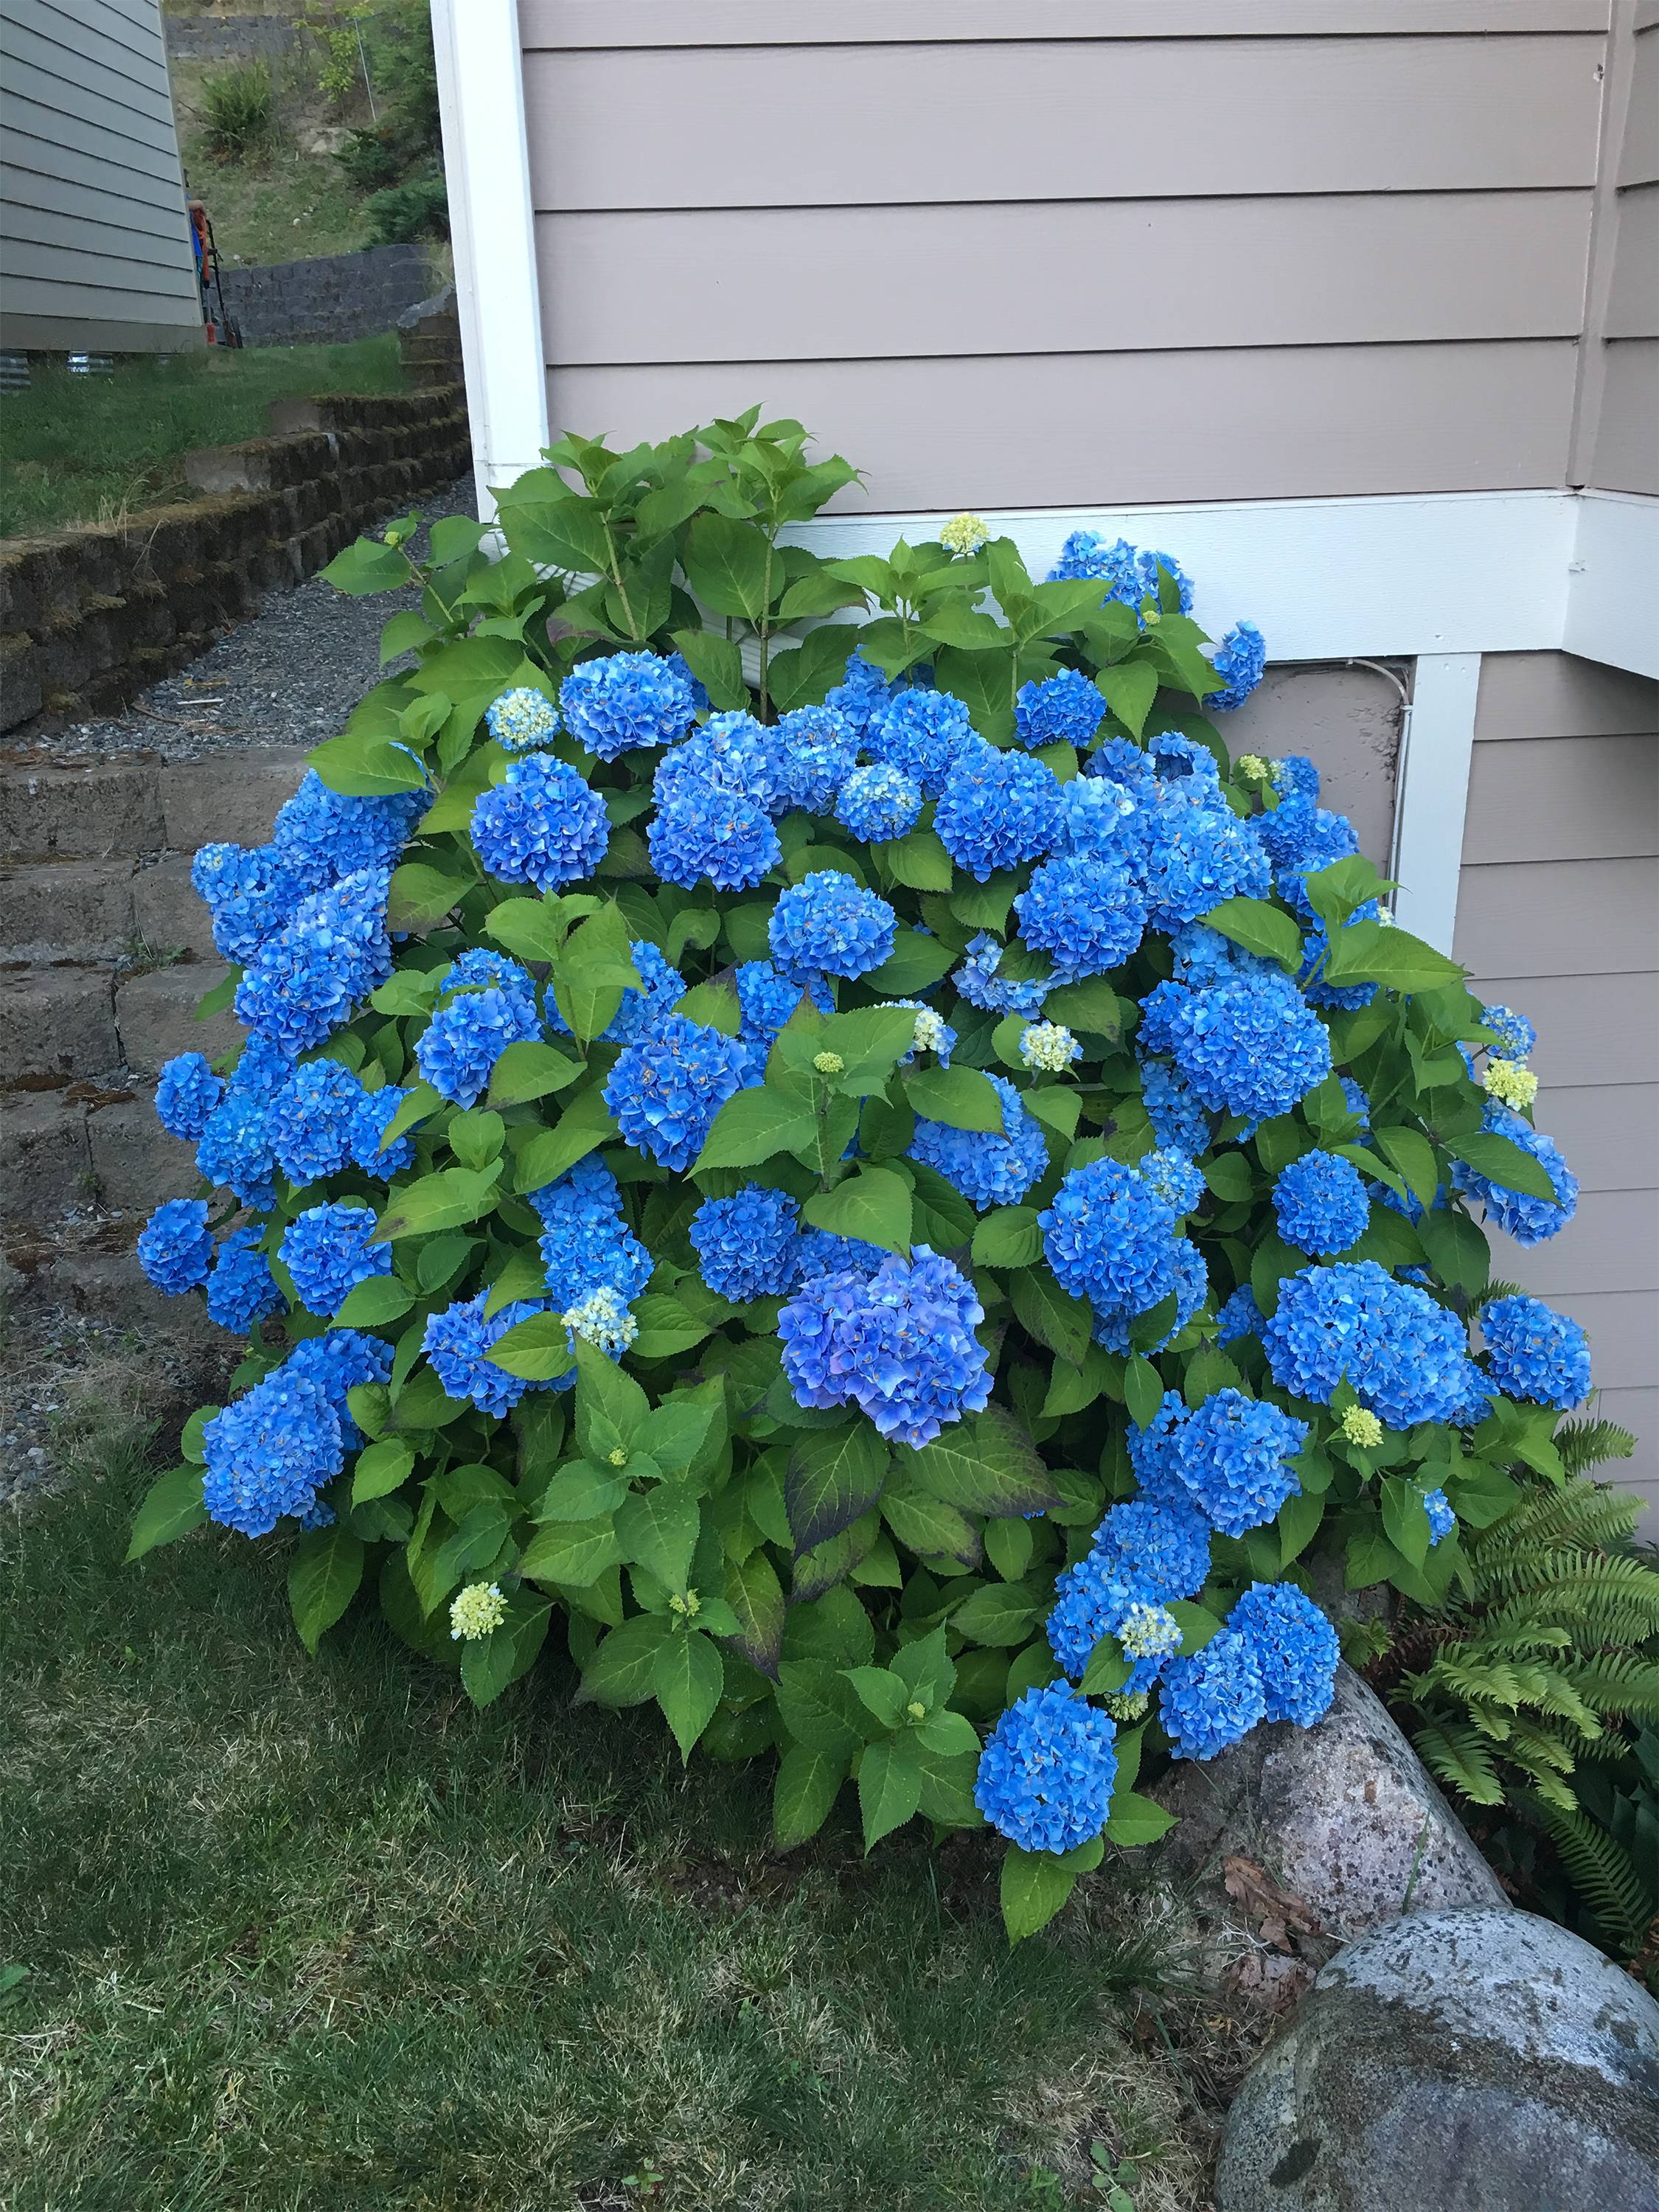 Image of Lowe's Endless Summer Hydrangea in full bloom, blue flowers